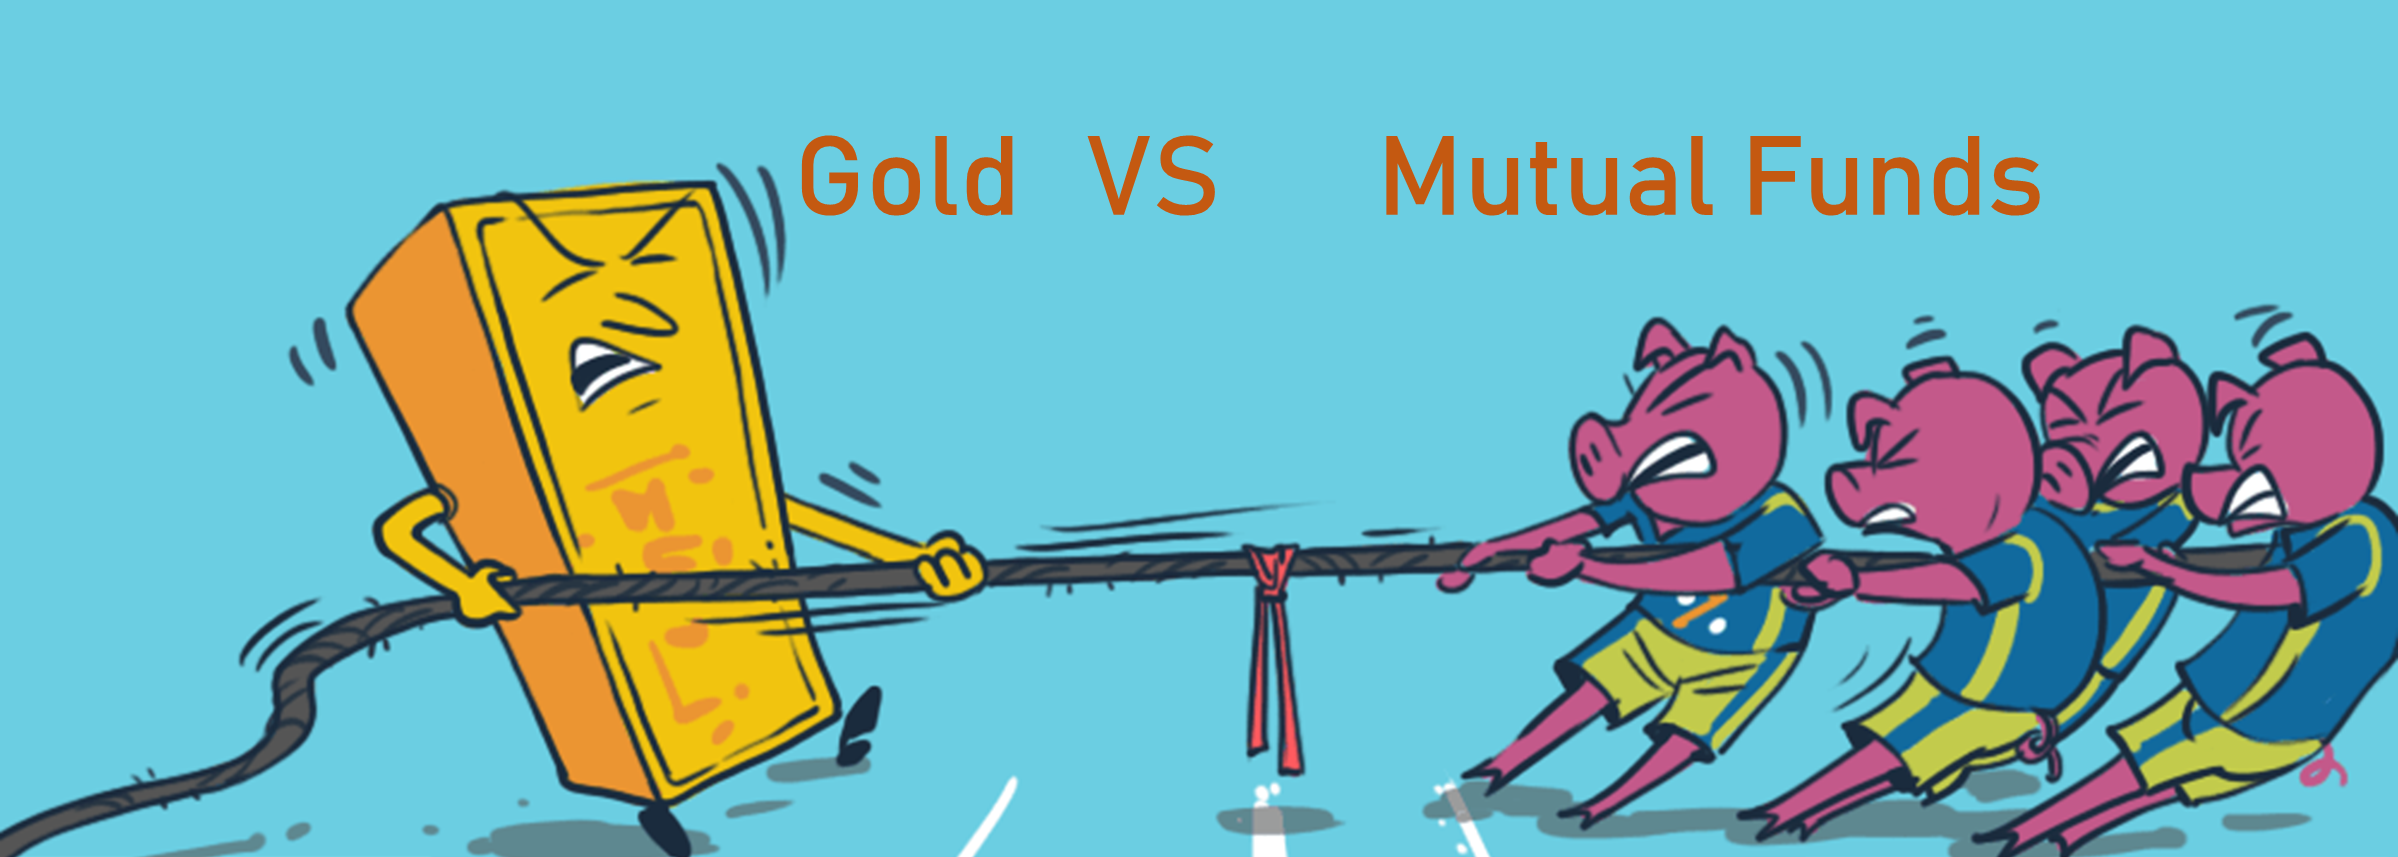 Gold vs Mutual Funds